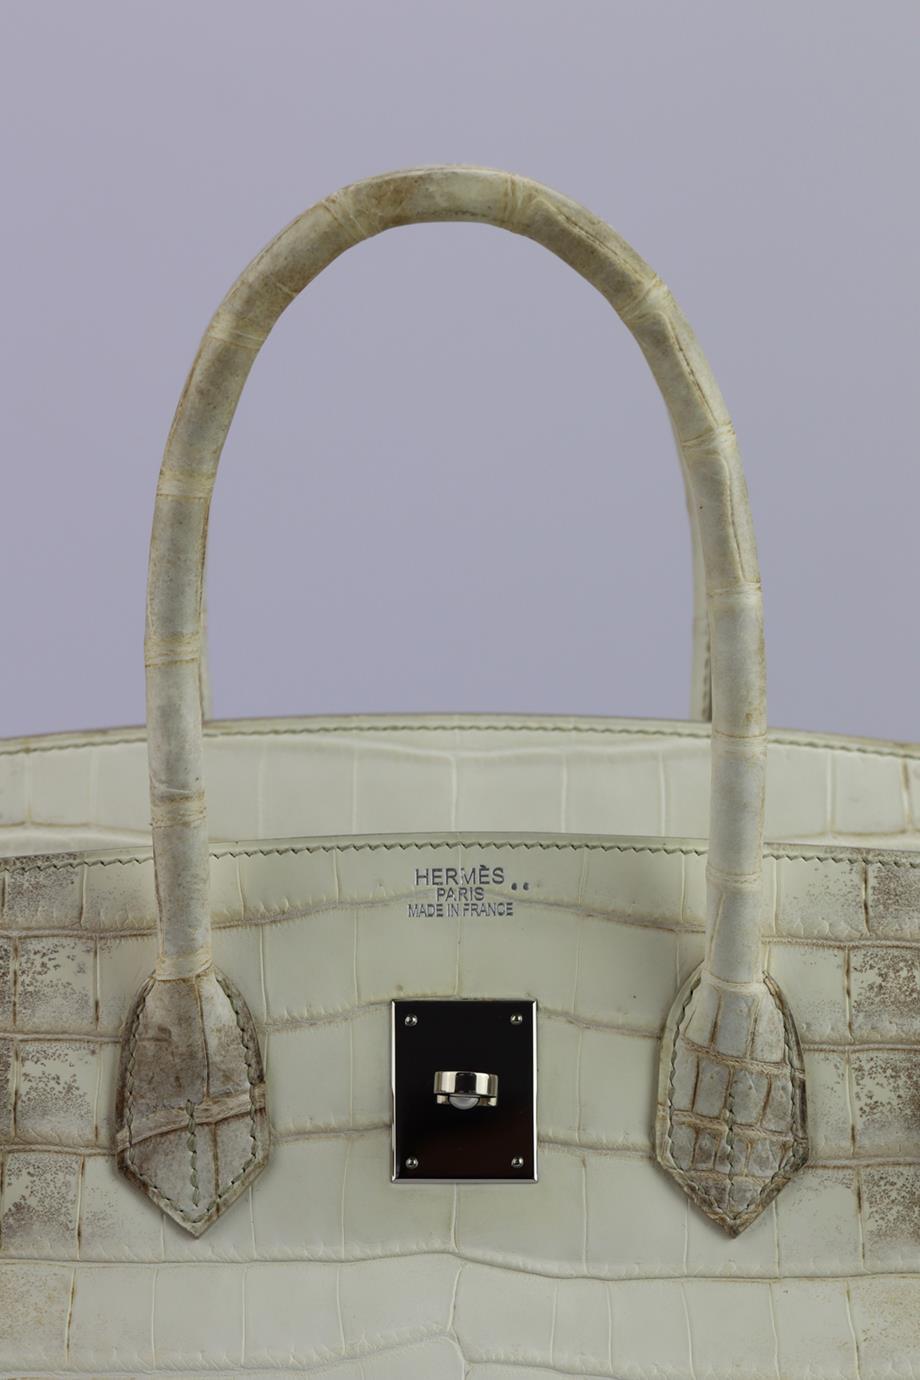 Hermès 2011 Birkin 35cm Himalayan Matte Niloticus Crocodile Bag For Sale 4